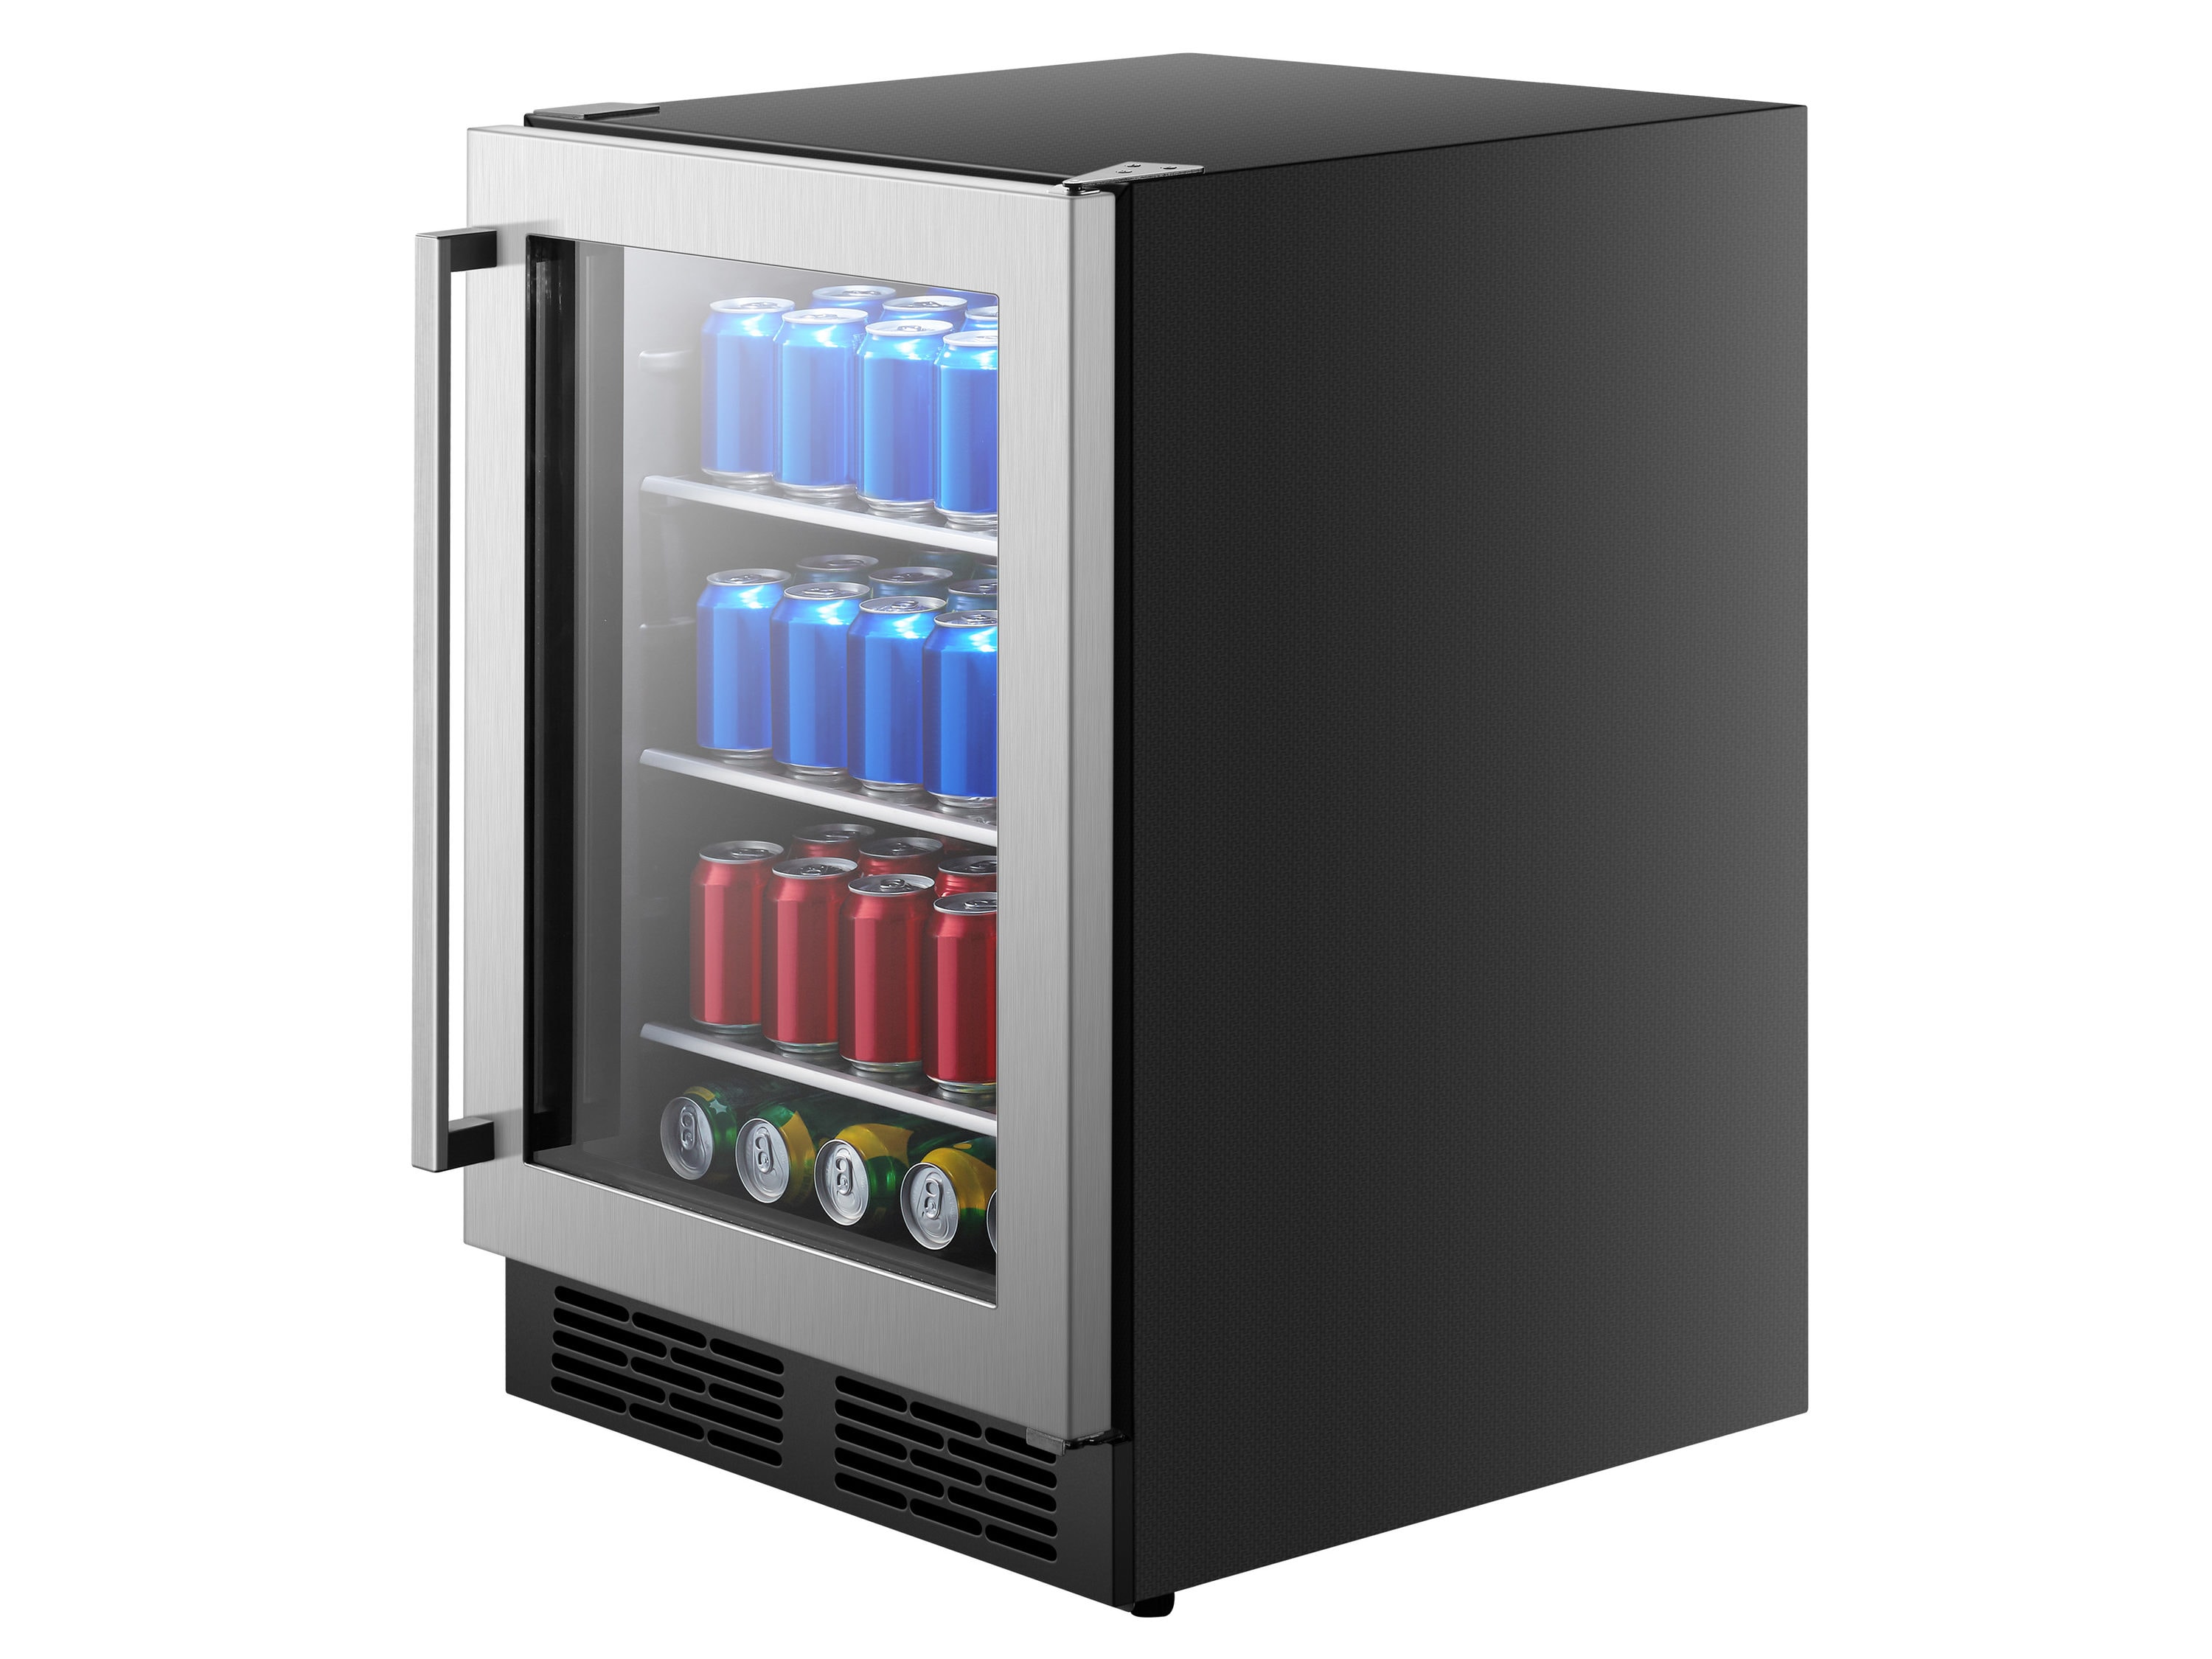 Hisense 23.43-in W Stainless Steel Built-In/Freestanding Beverage  Refrigerator with Glass Door